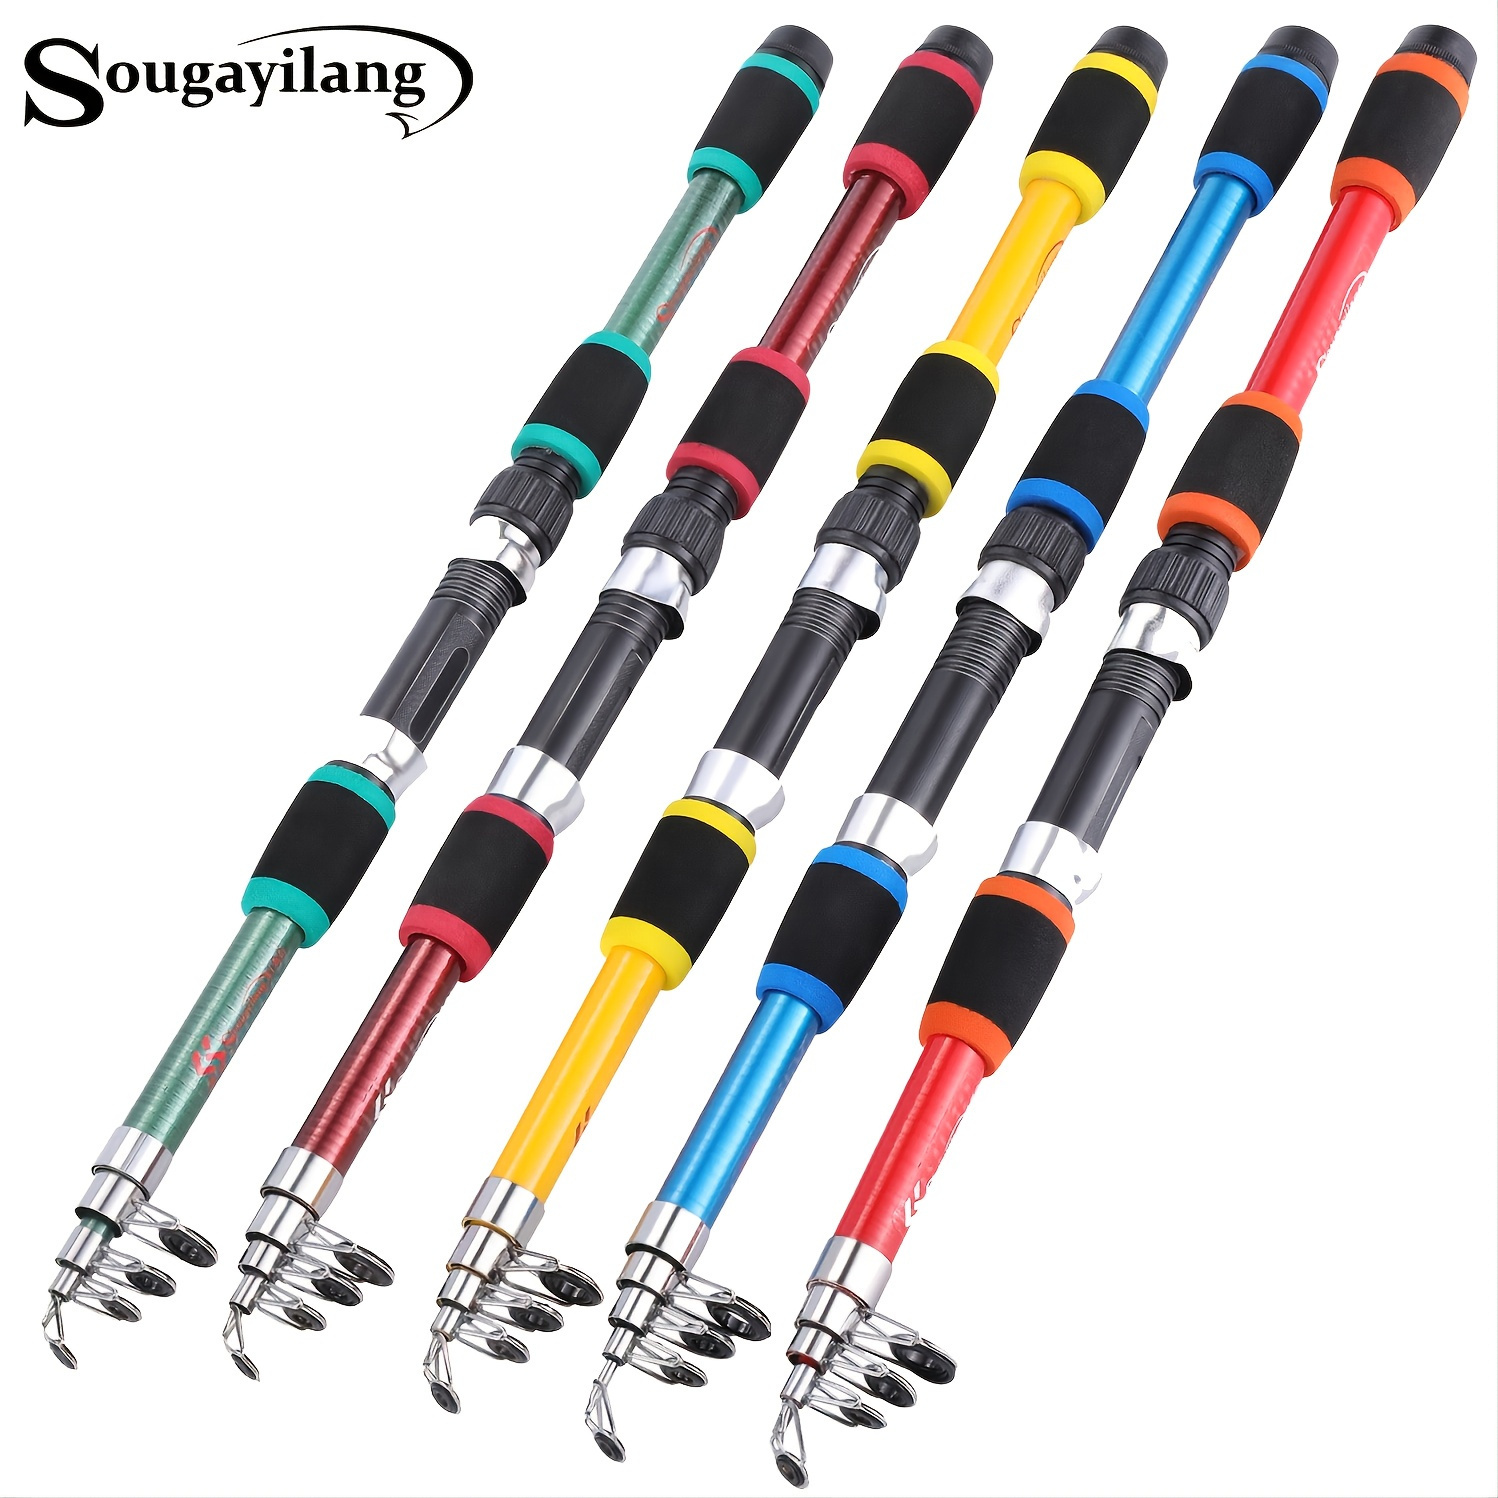 

Sougayilang Telescopic Fishing Rod - Lightweight, Portable, And Durable Glass Fiber Fishing Pole